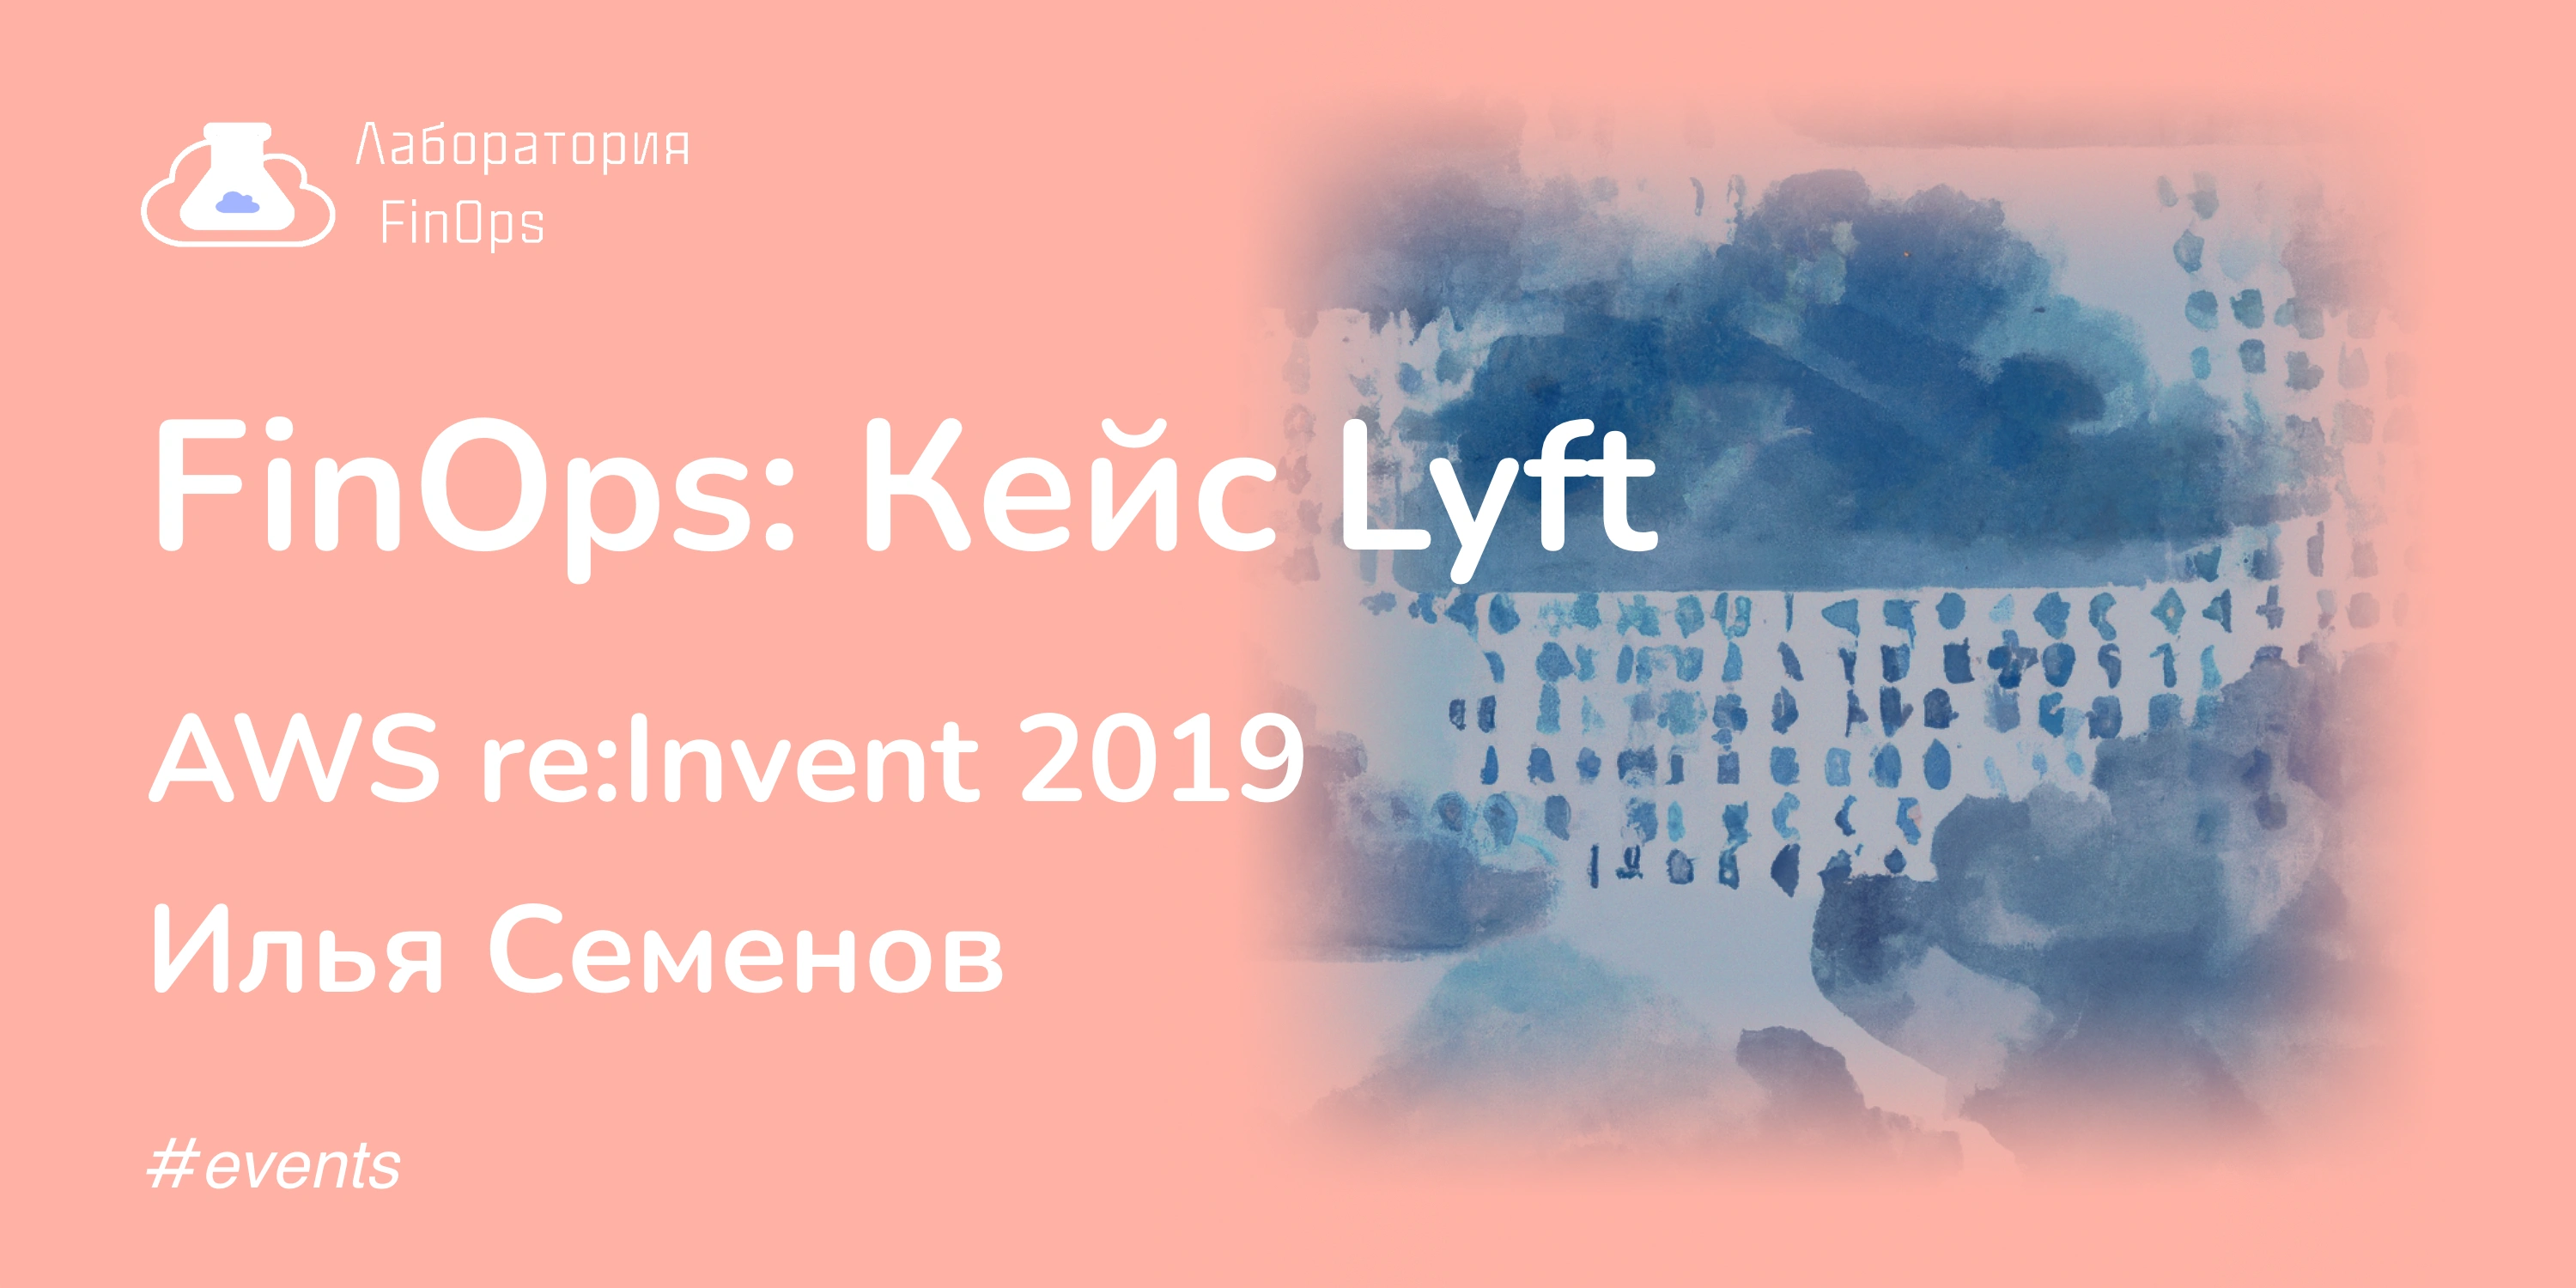 AWS re:Invent 2019 – Кейс Lyft